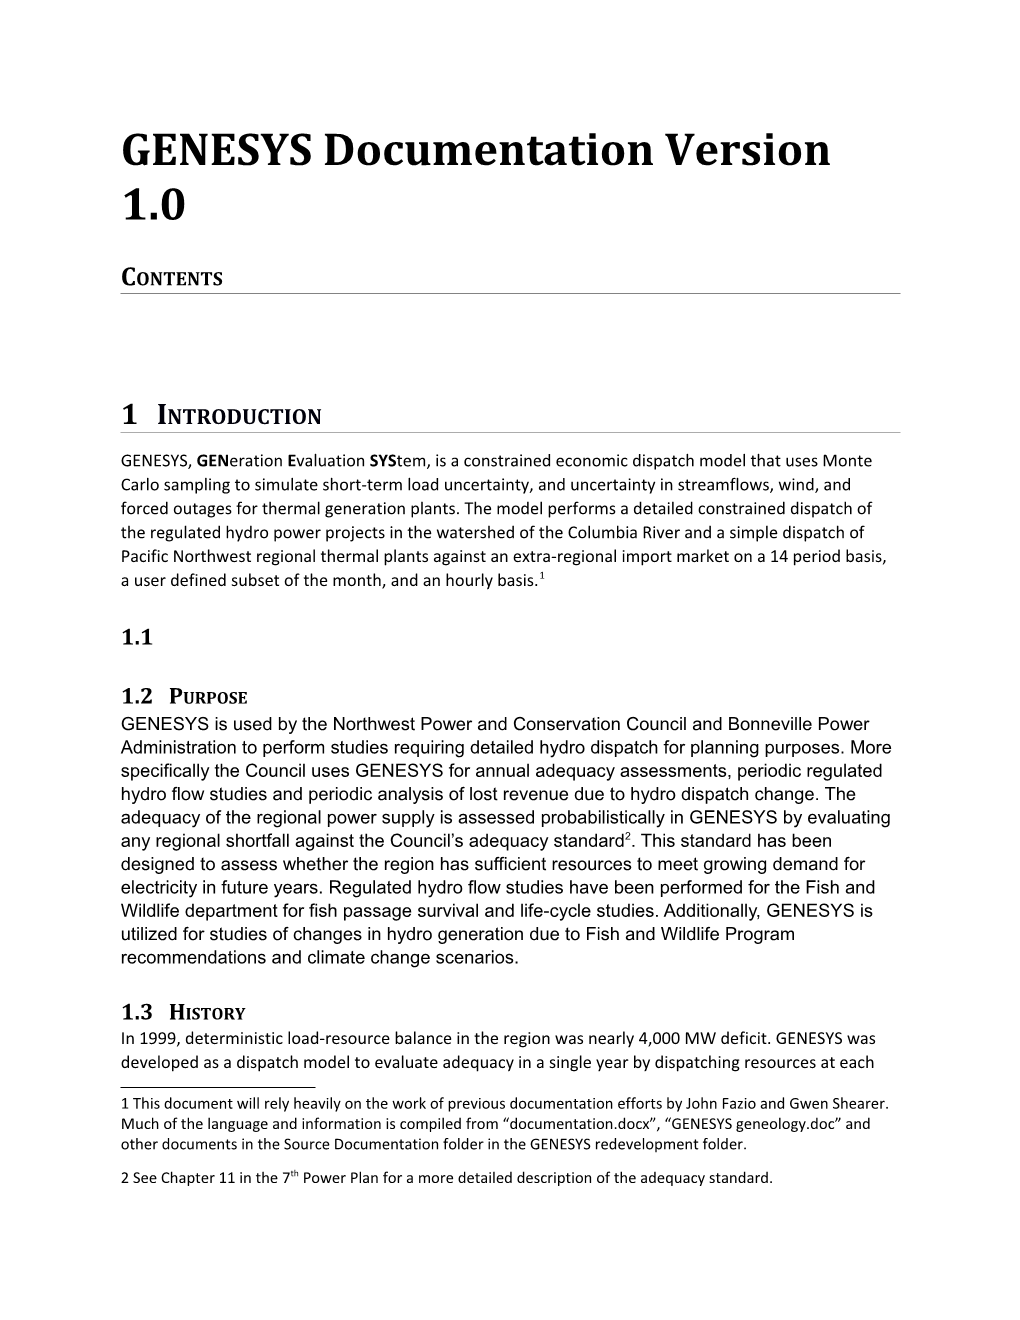 GENESYS Documentation Version 1.0